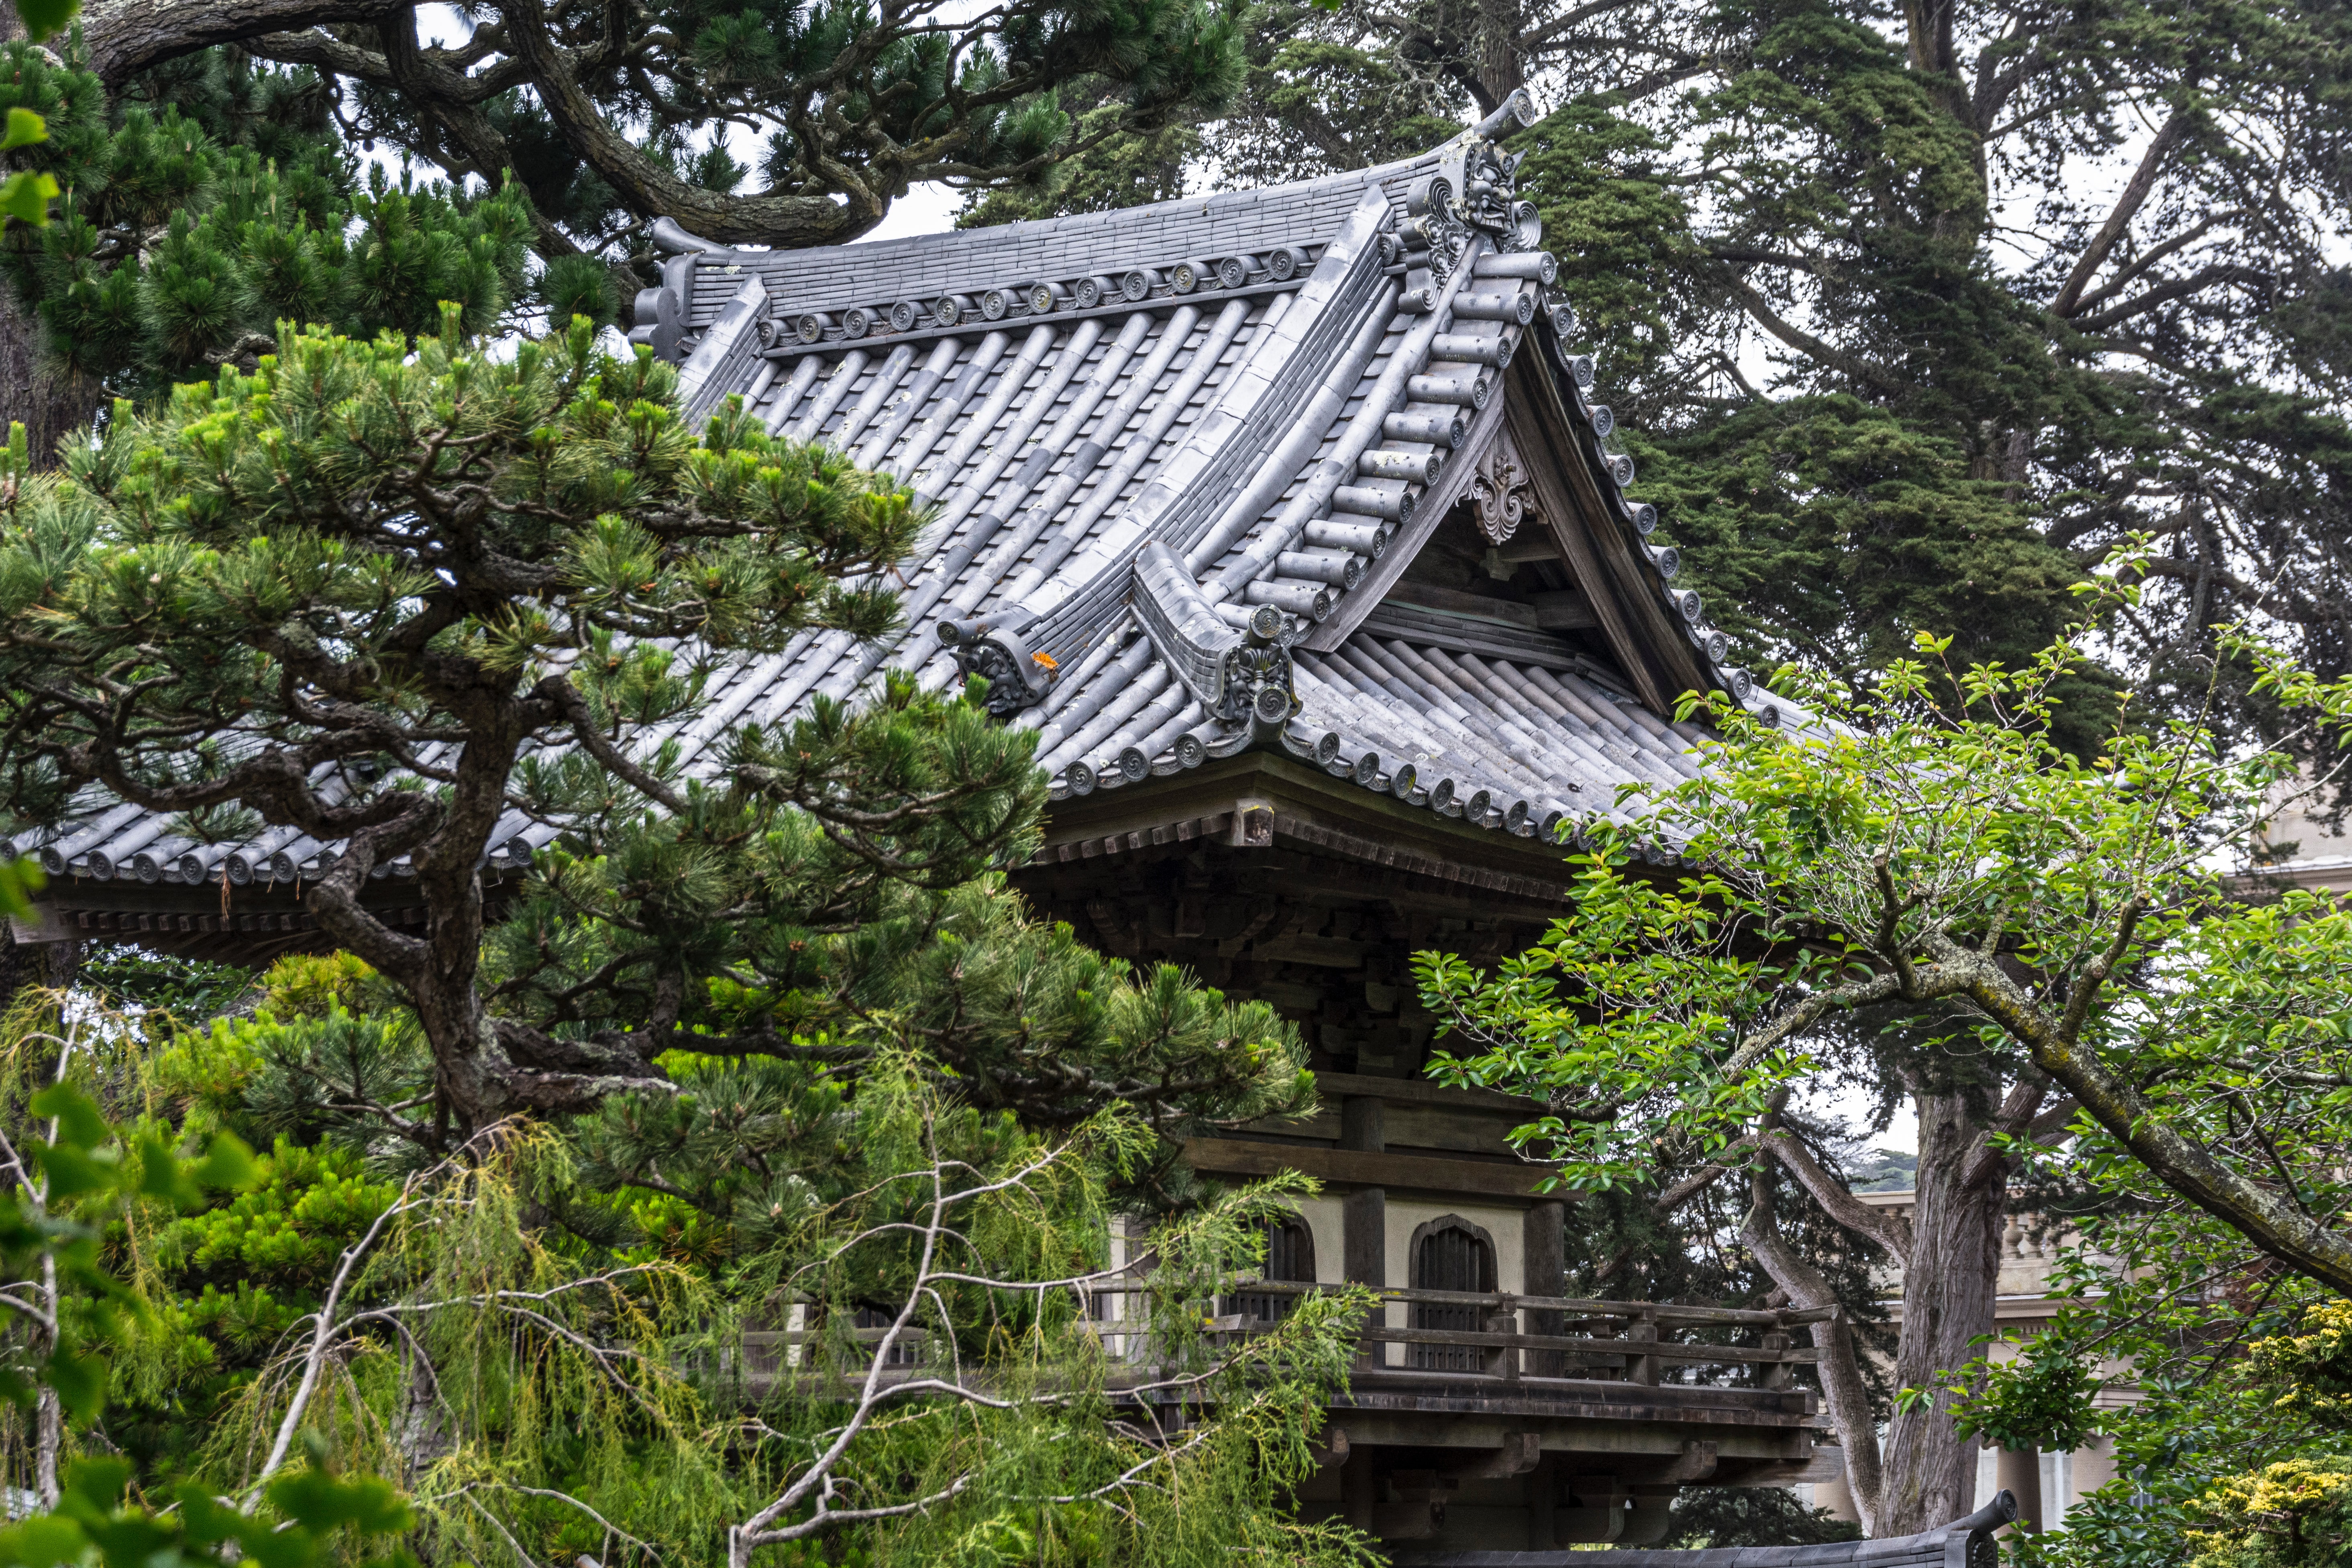 Japanese building amongst trees